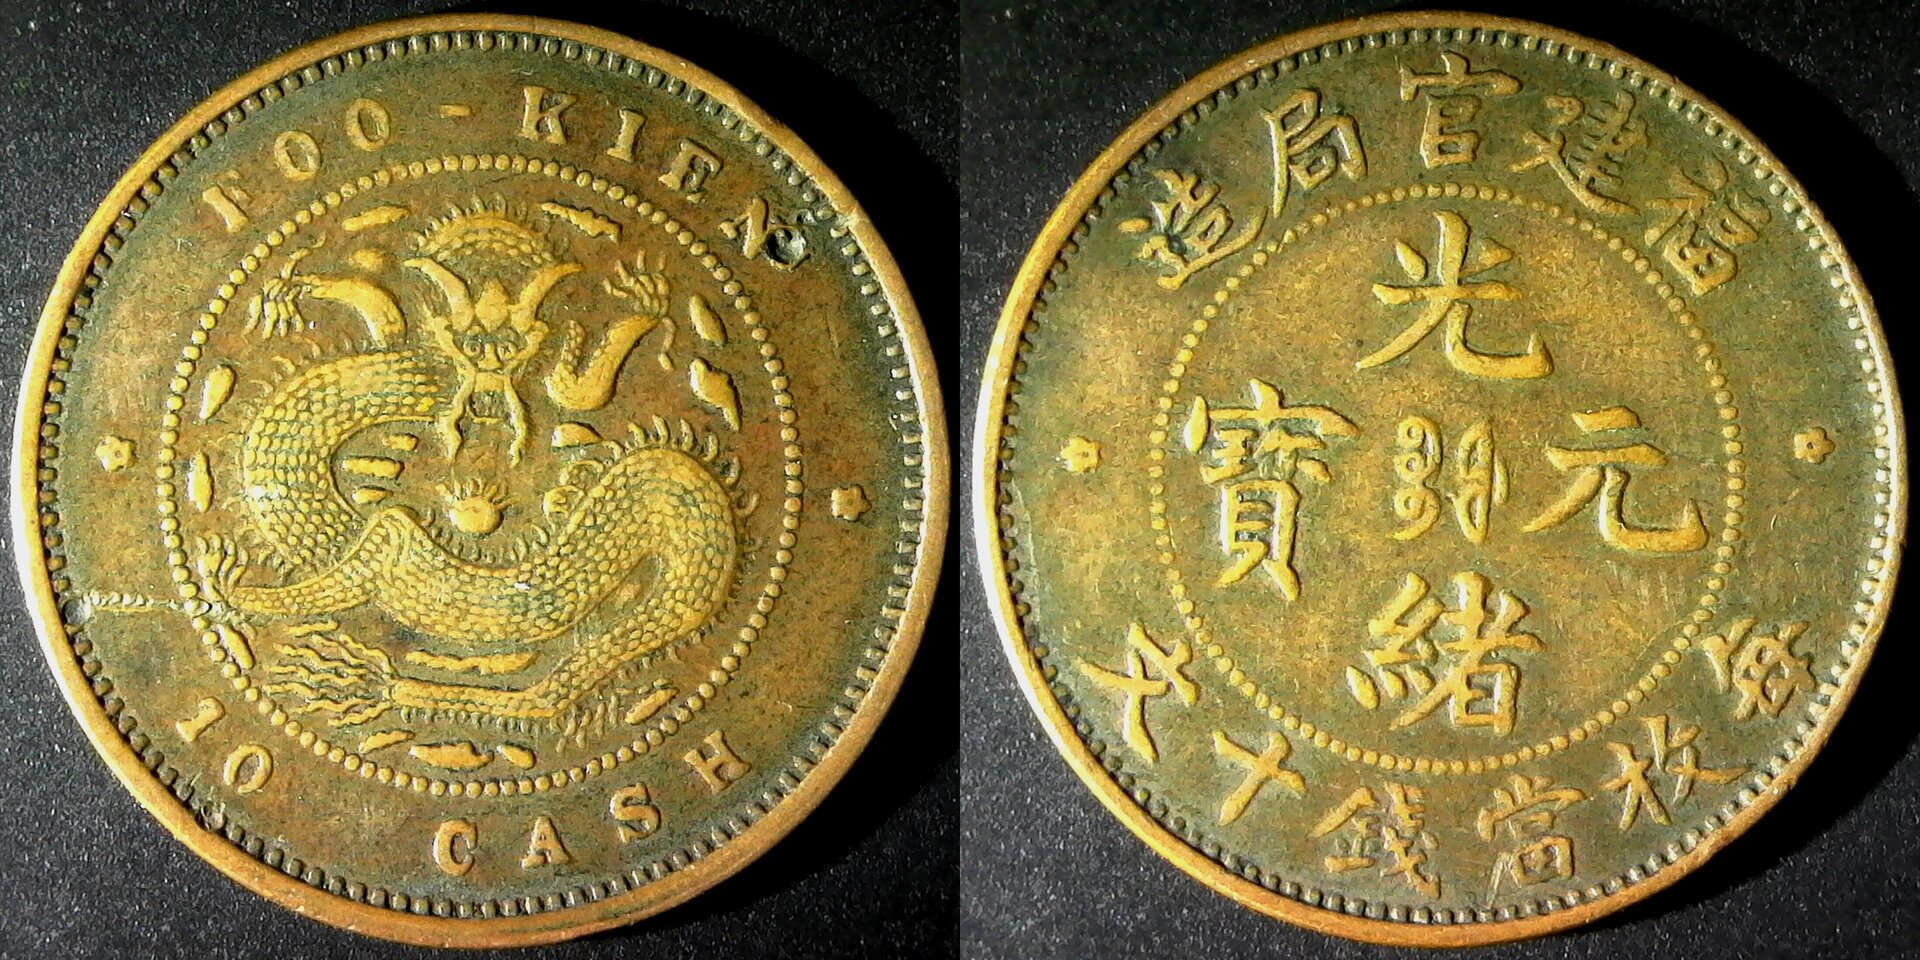 China Fukien 10 Cash circa 1901 - 1905 Fujian obv-side.jpg